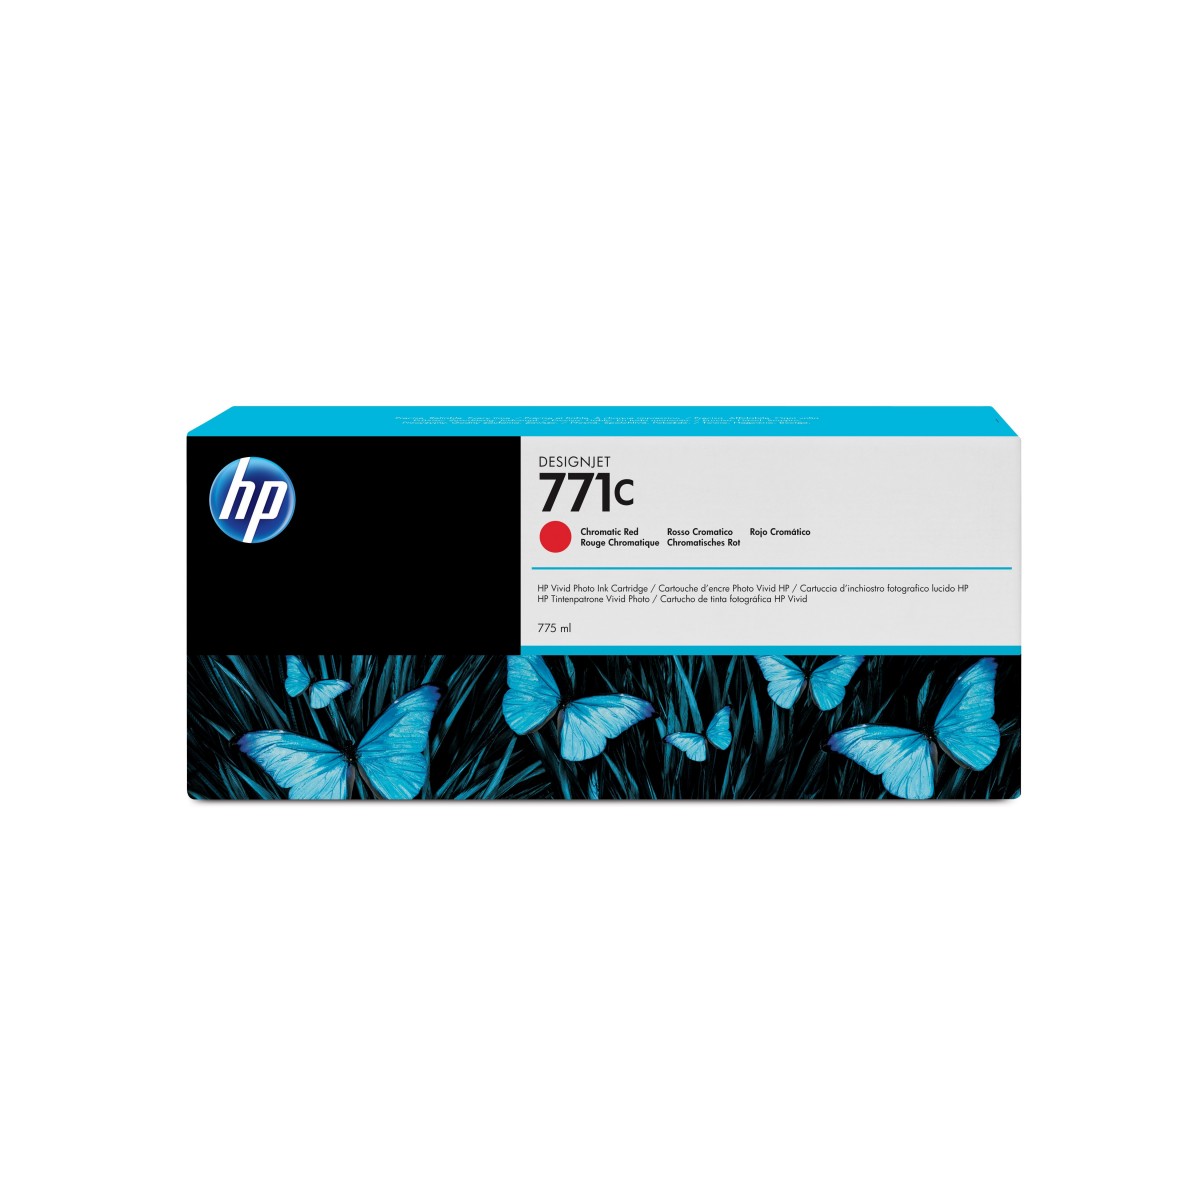 HP DesignJet 771C - Ink Cartridge Original - magenta - 775 ml